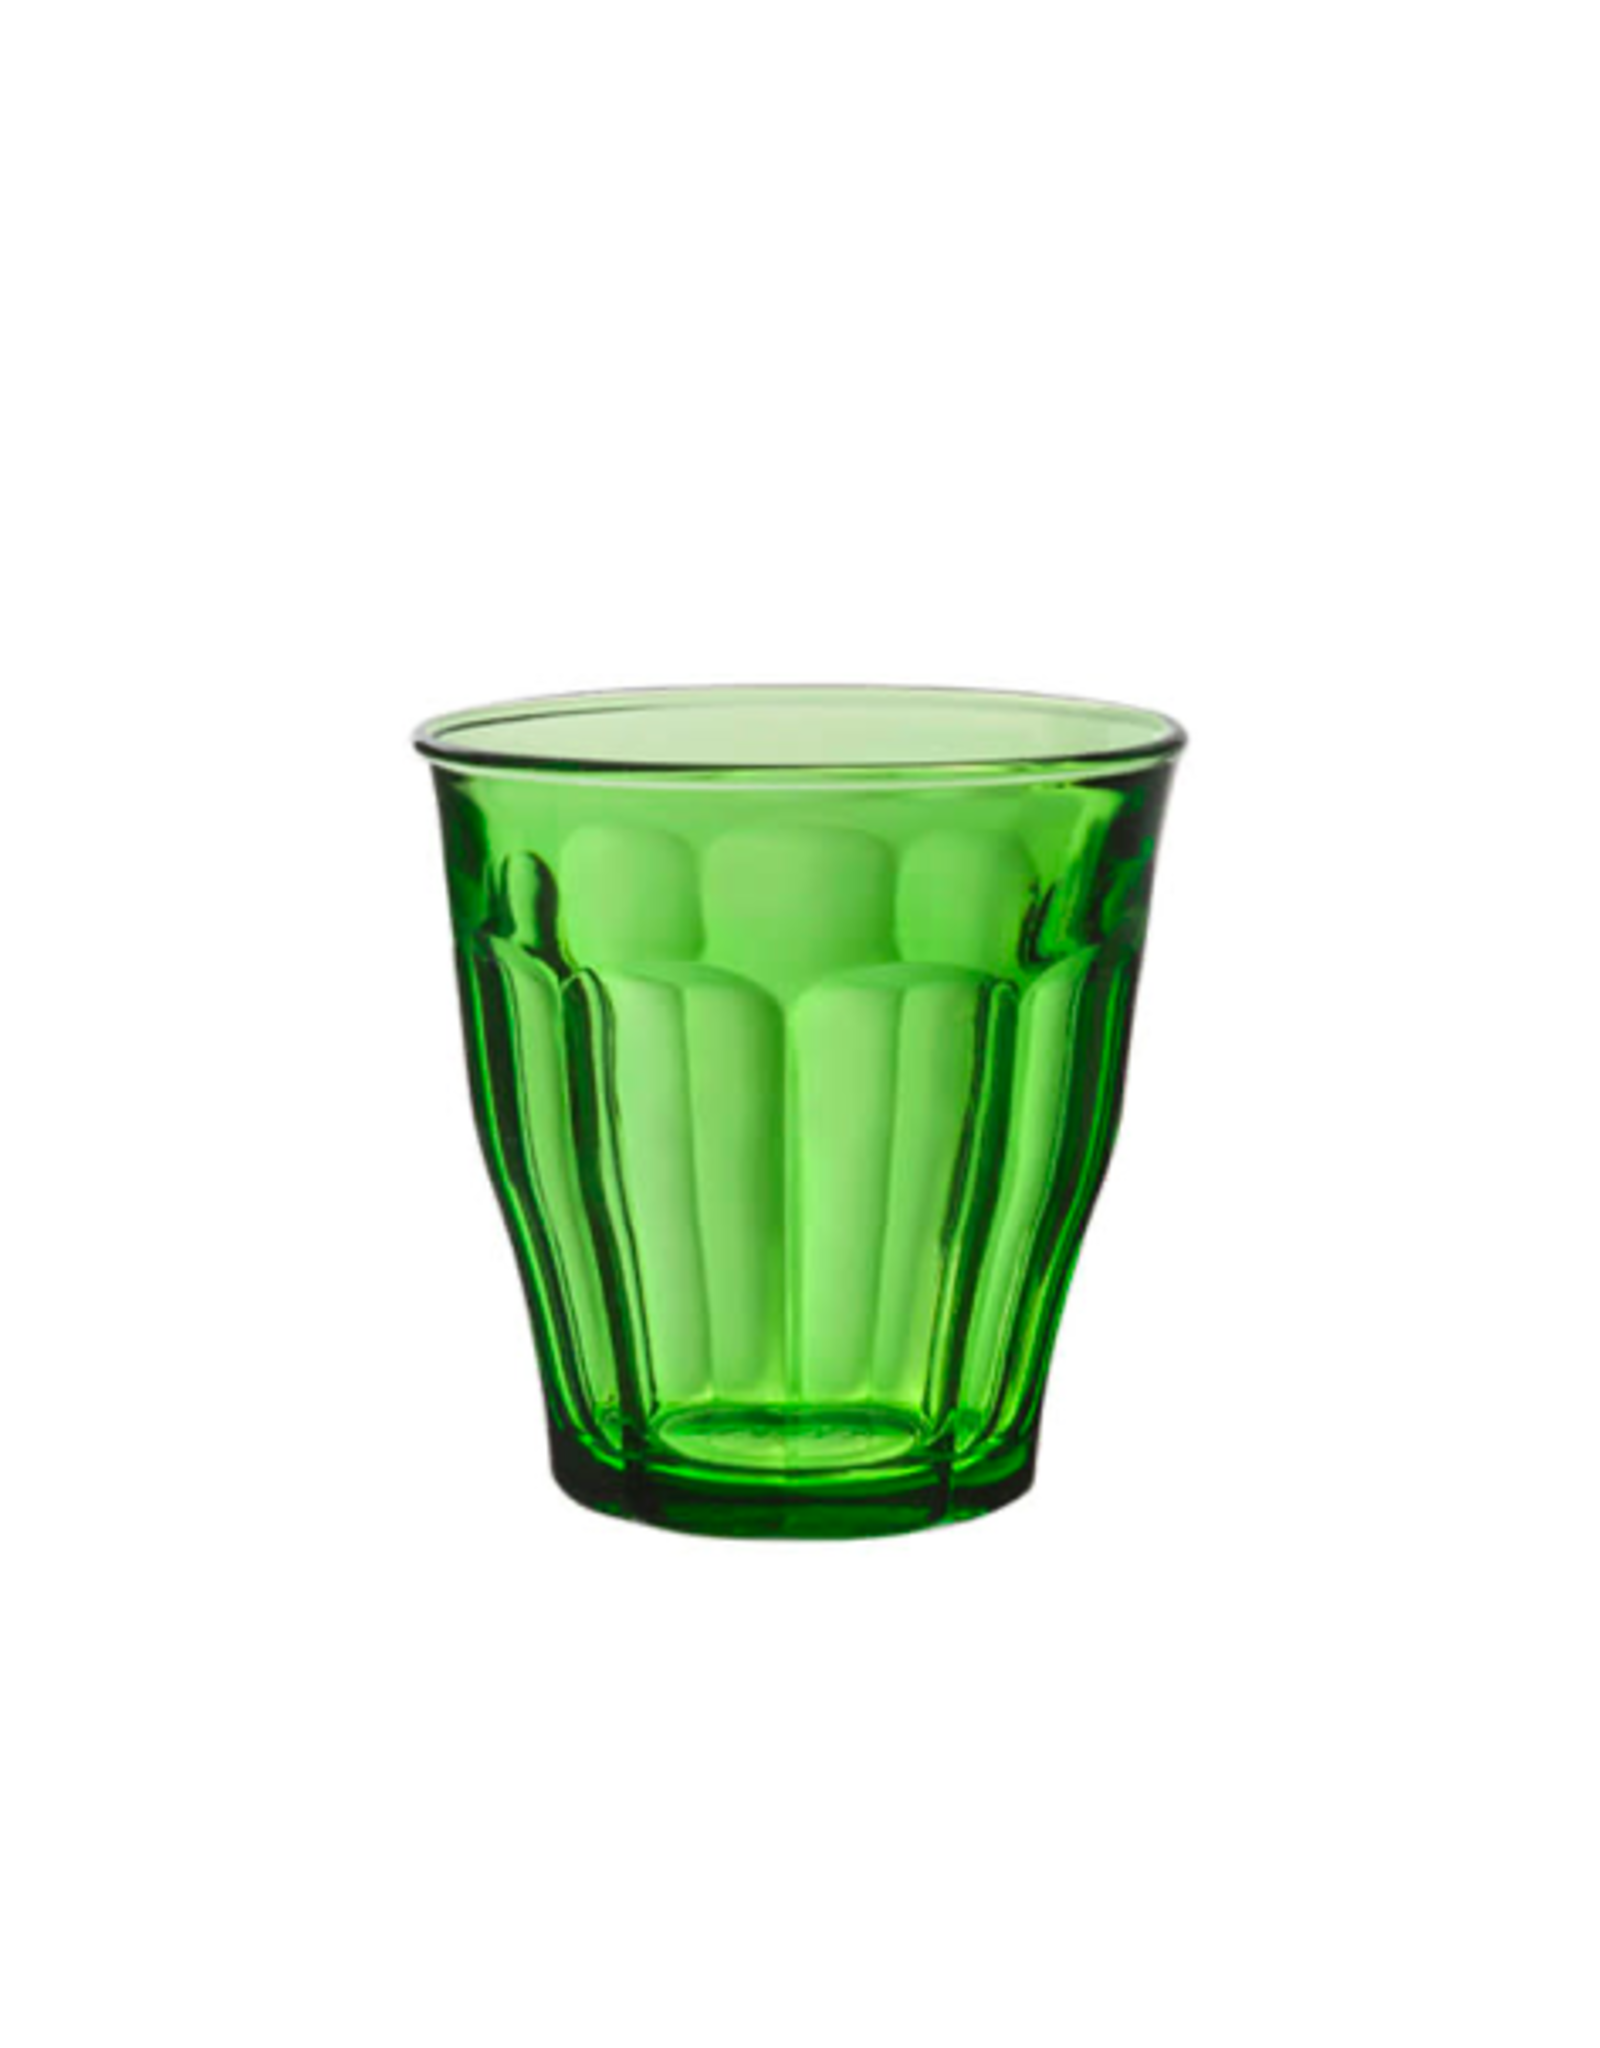 ICM - Duralex Glass Tumbler / Picardie, Green, 250ml